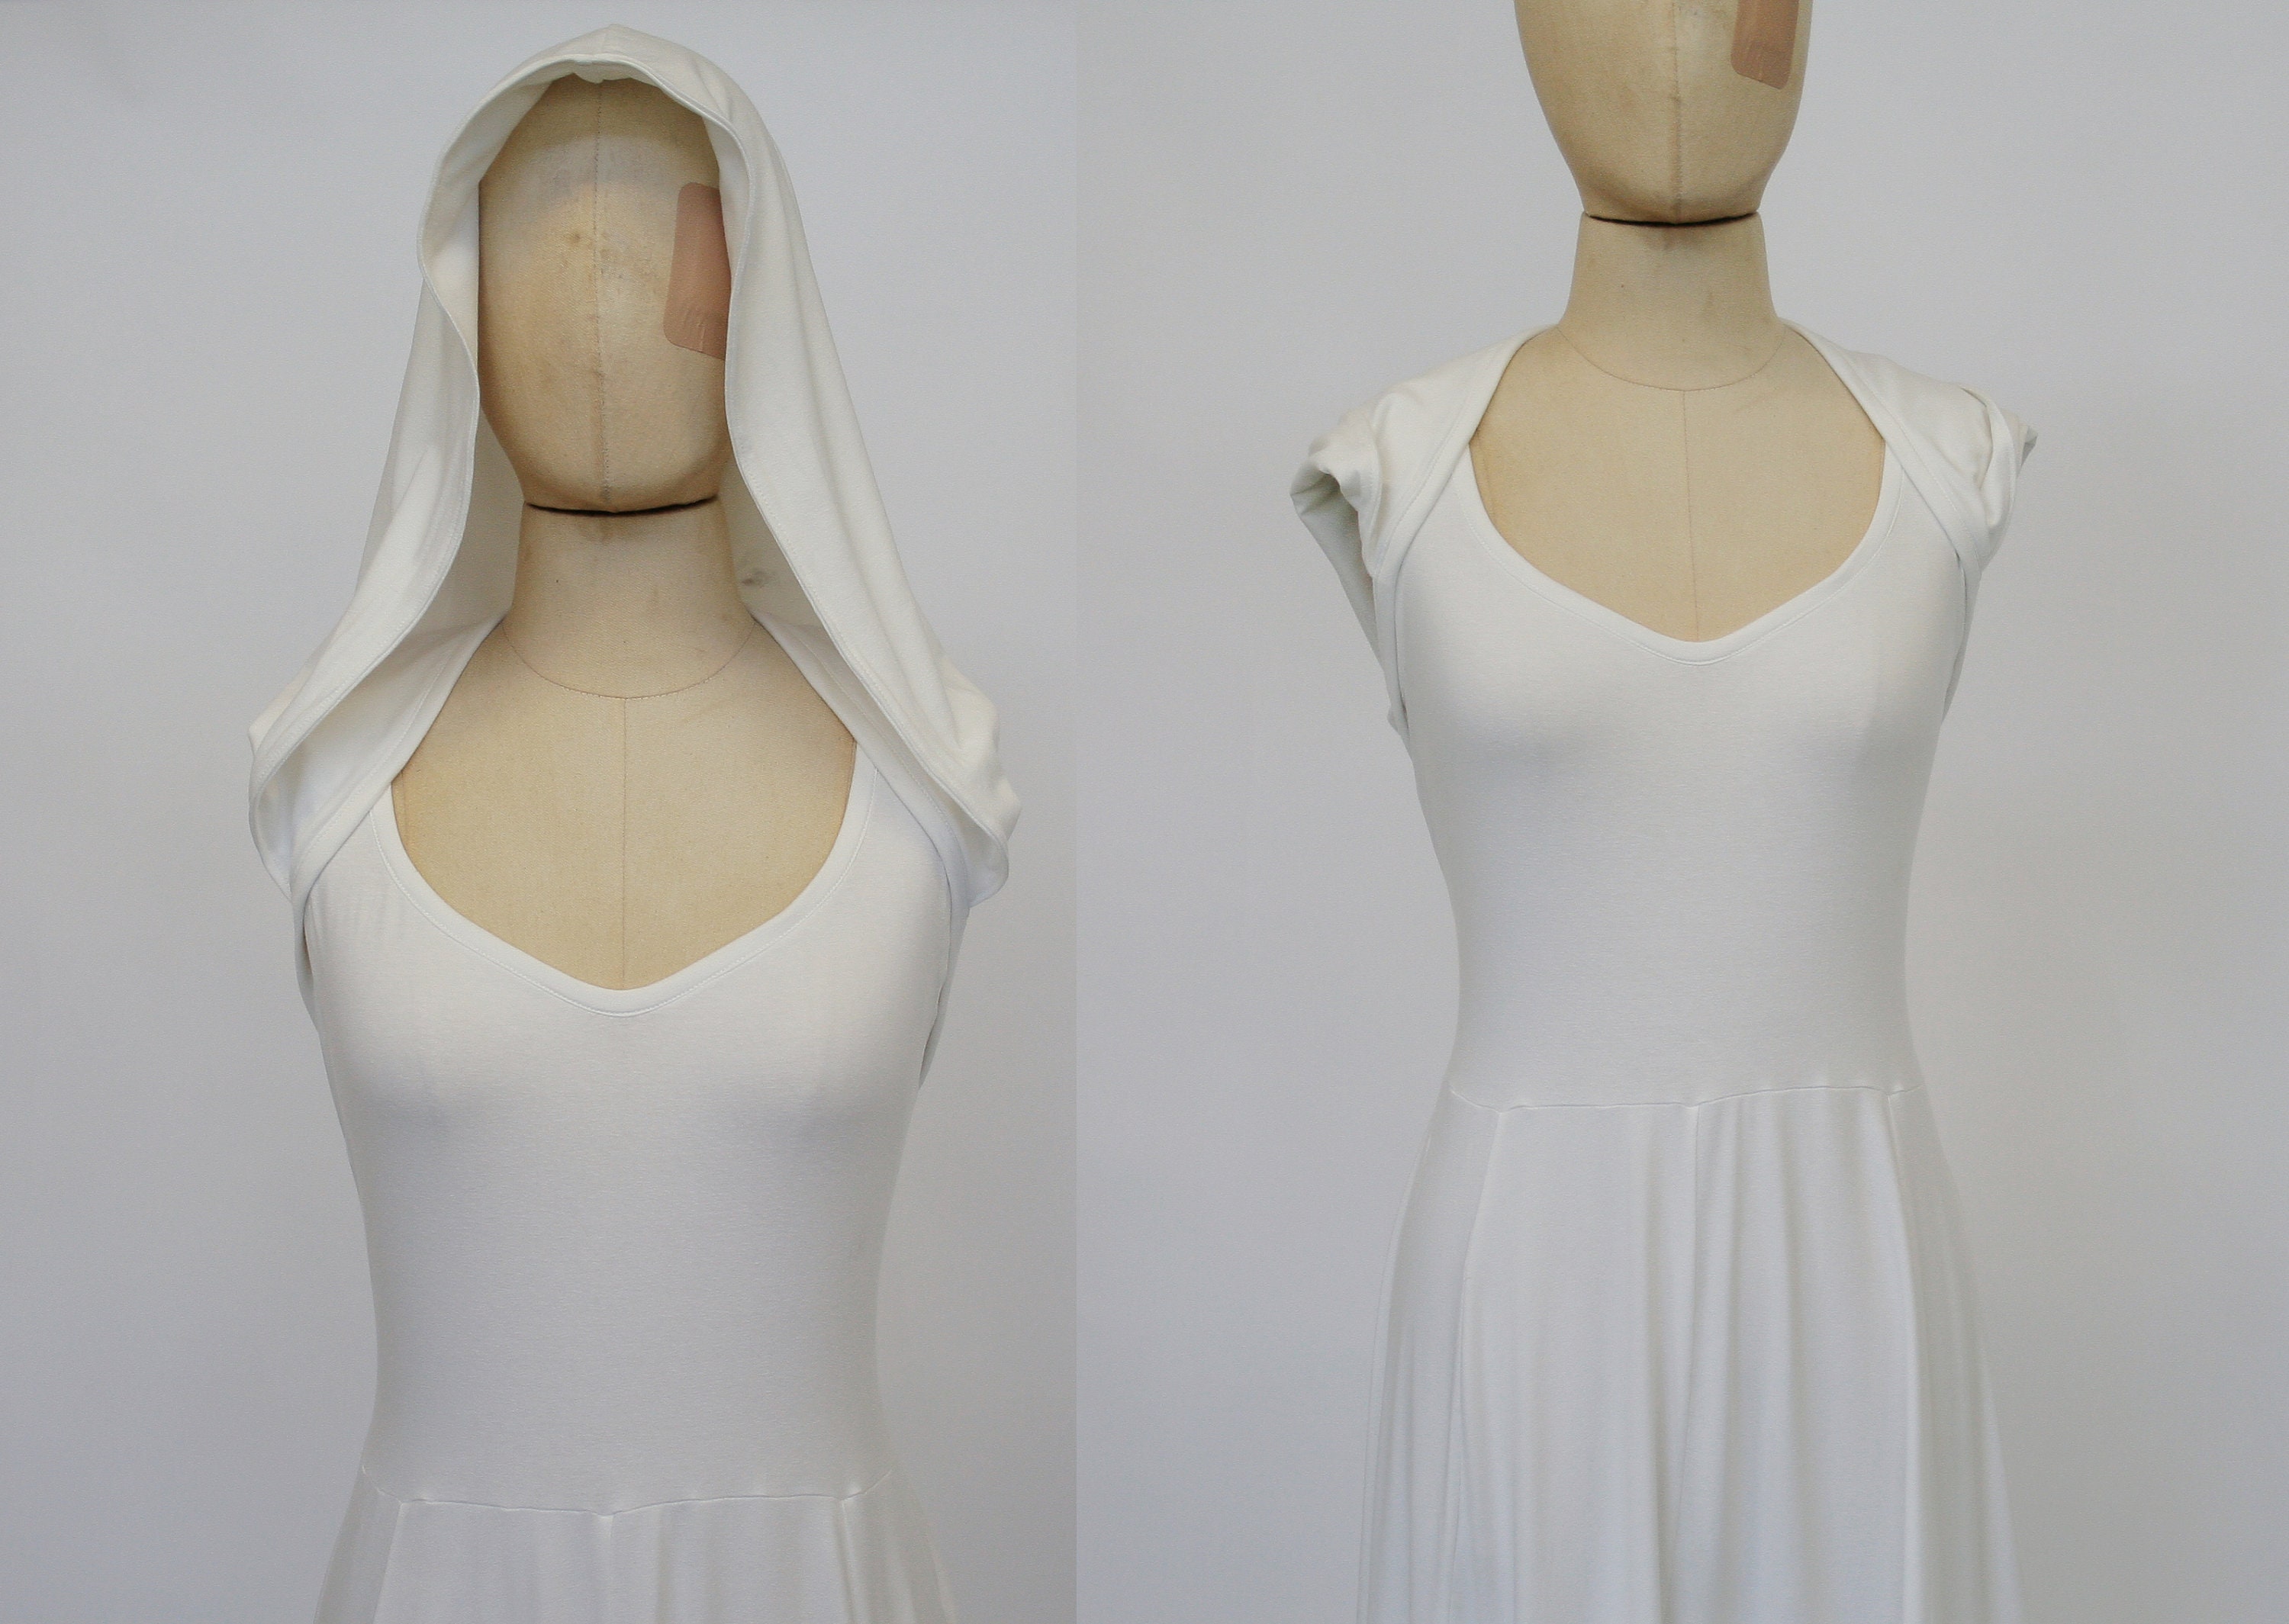 Hooded maxi dress wedding gown fairytale pixie organic | Etsy